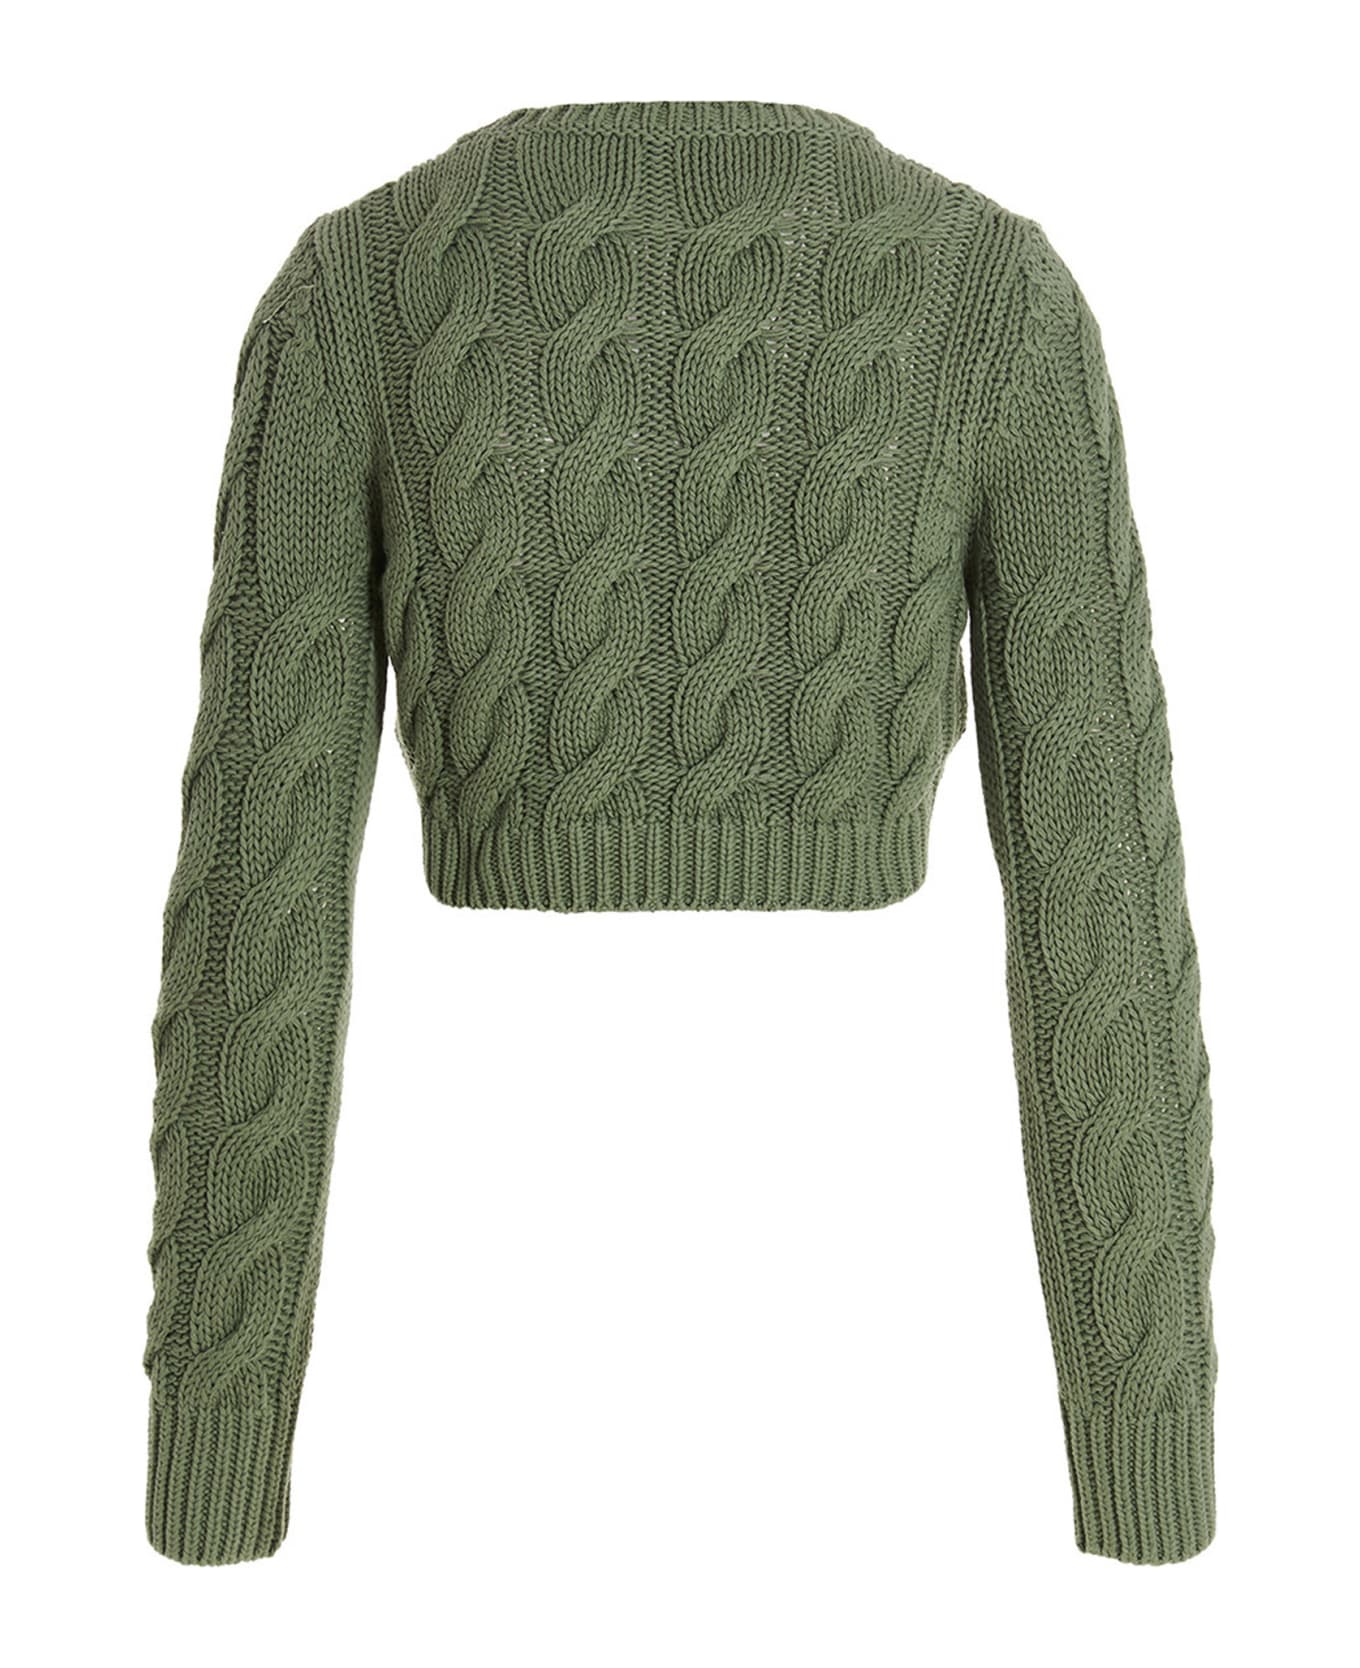 Max Mara 'sphinx' Sweater - Green ニットウェア